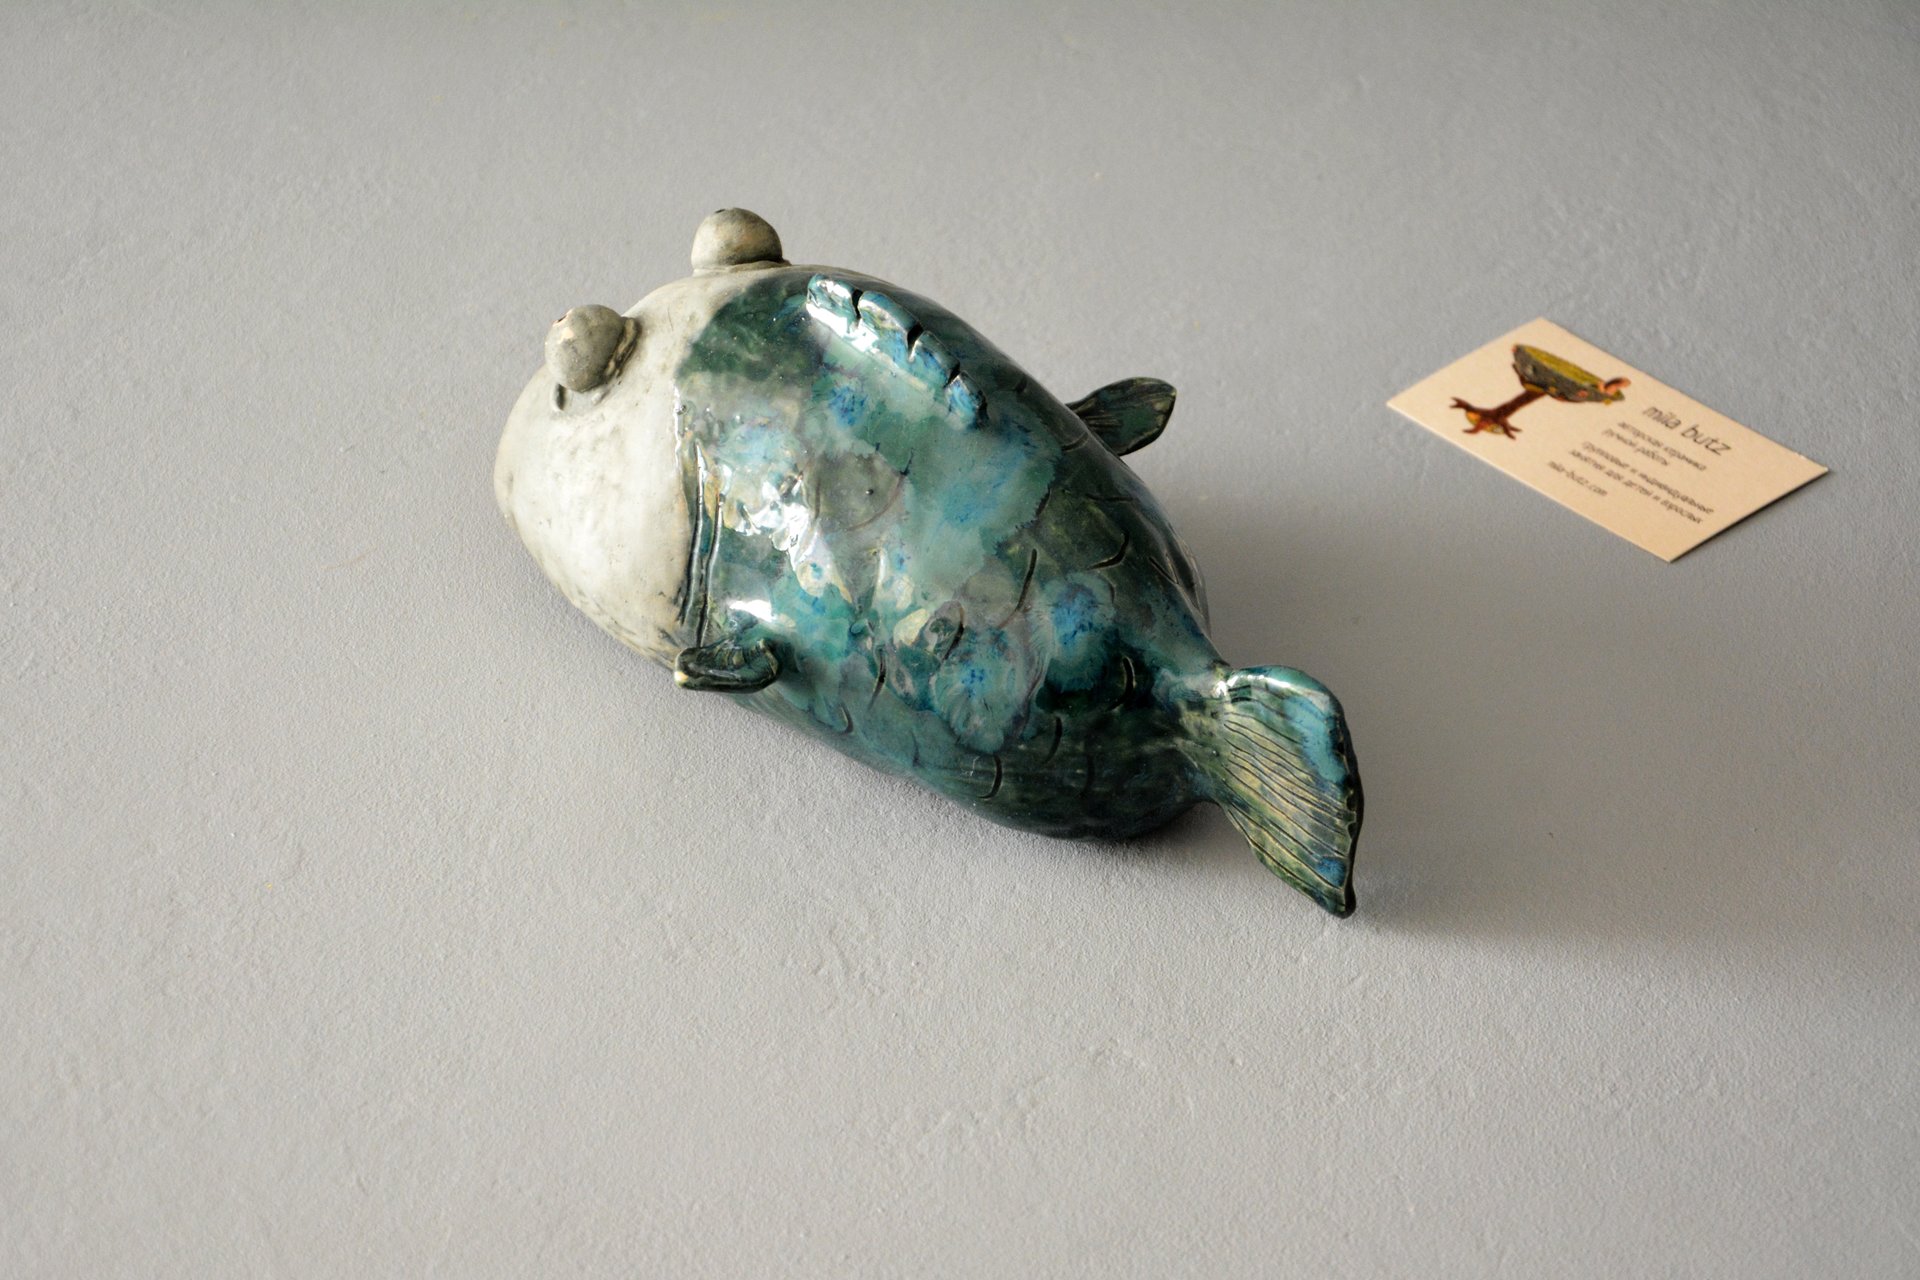 A figurine of a big fish made of clay, высота - 15 см, длина - 24 см, ширина - 11 см, photo 5 of 6.